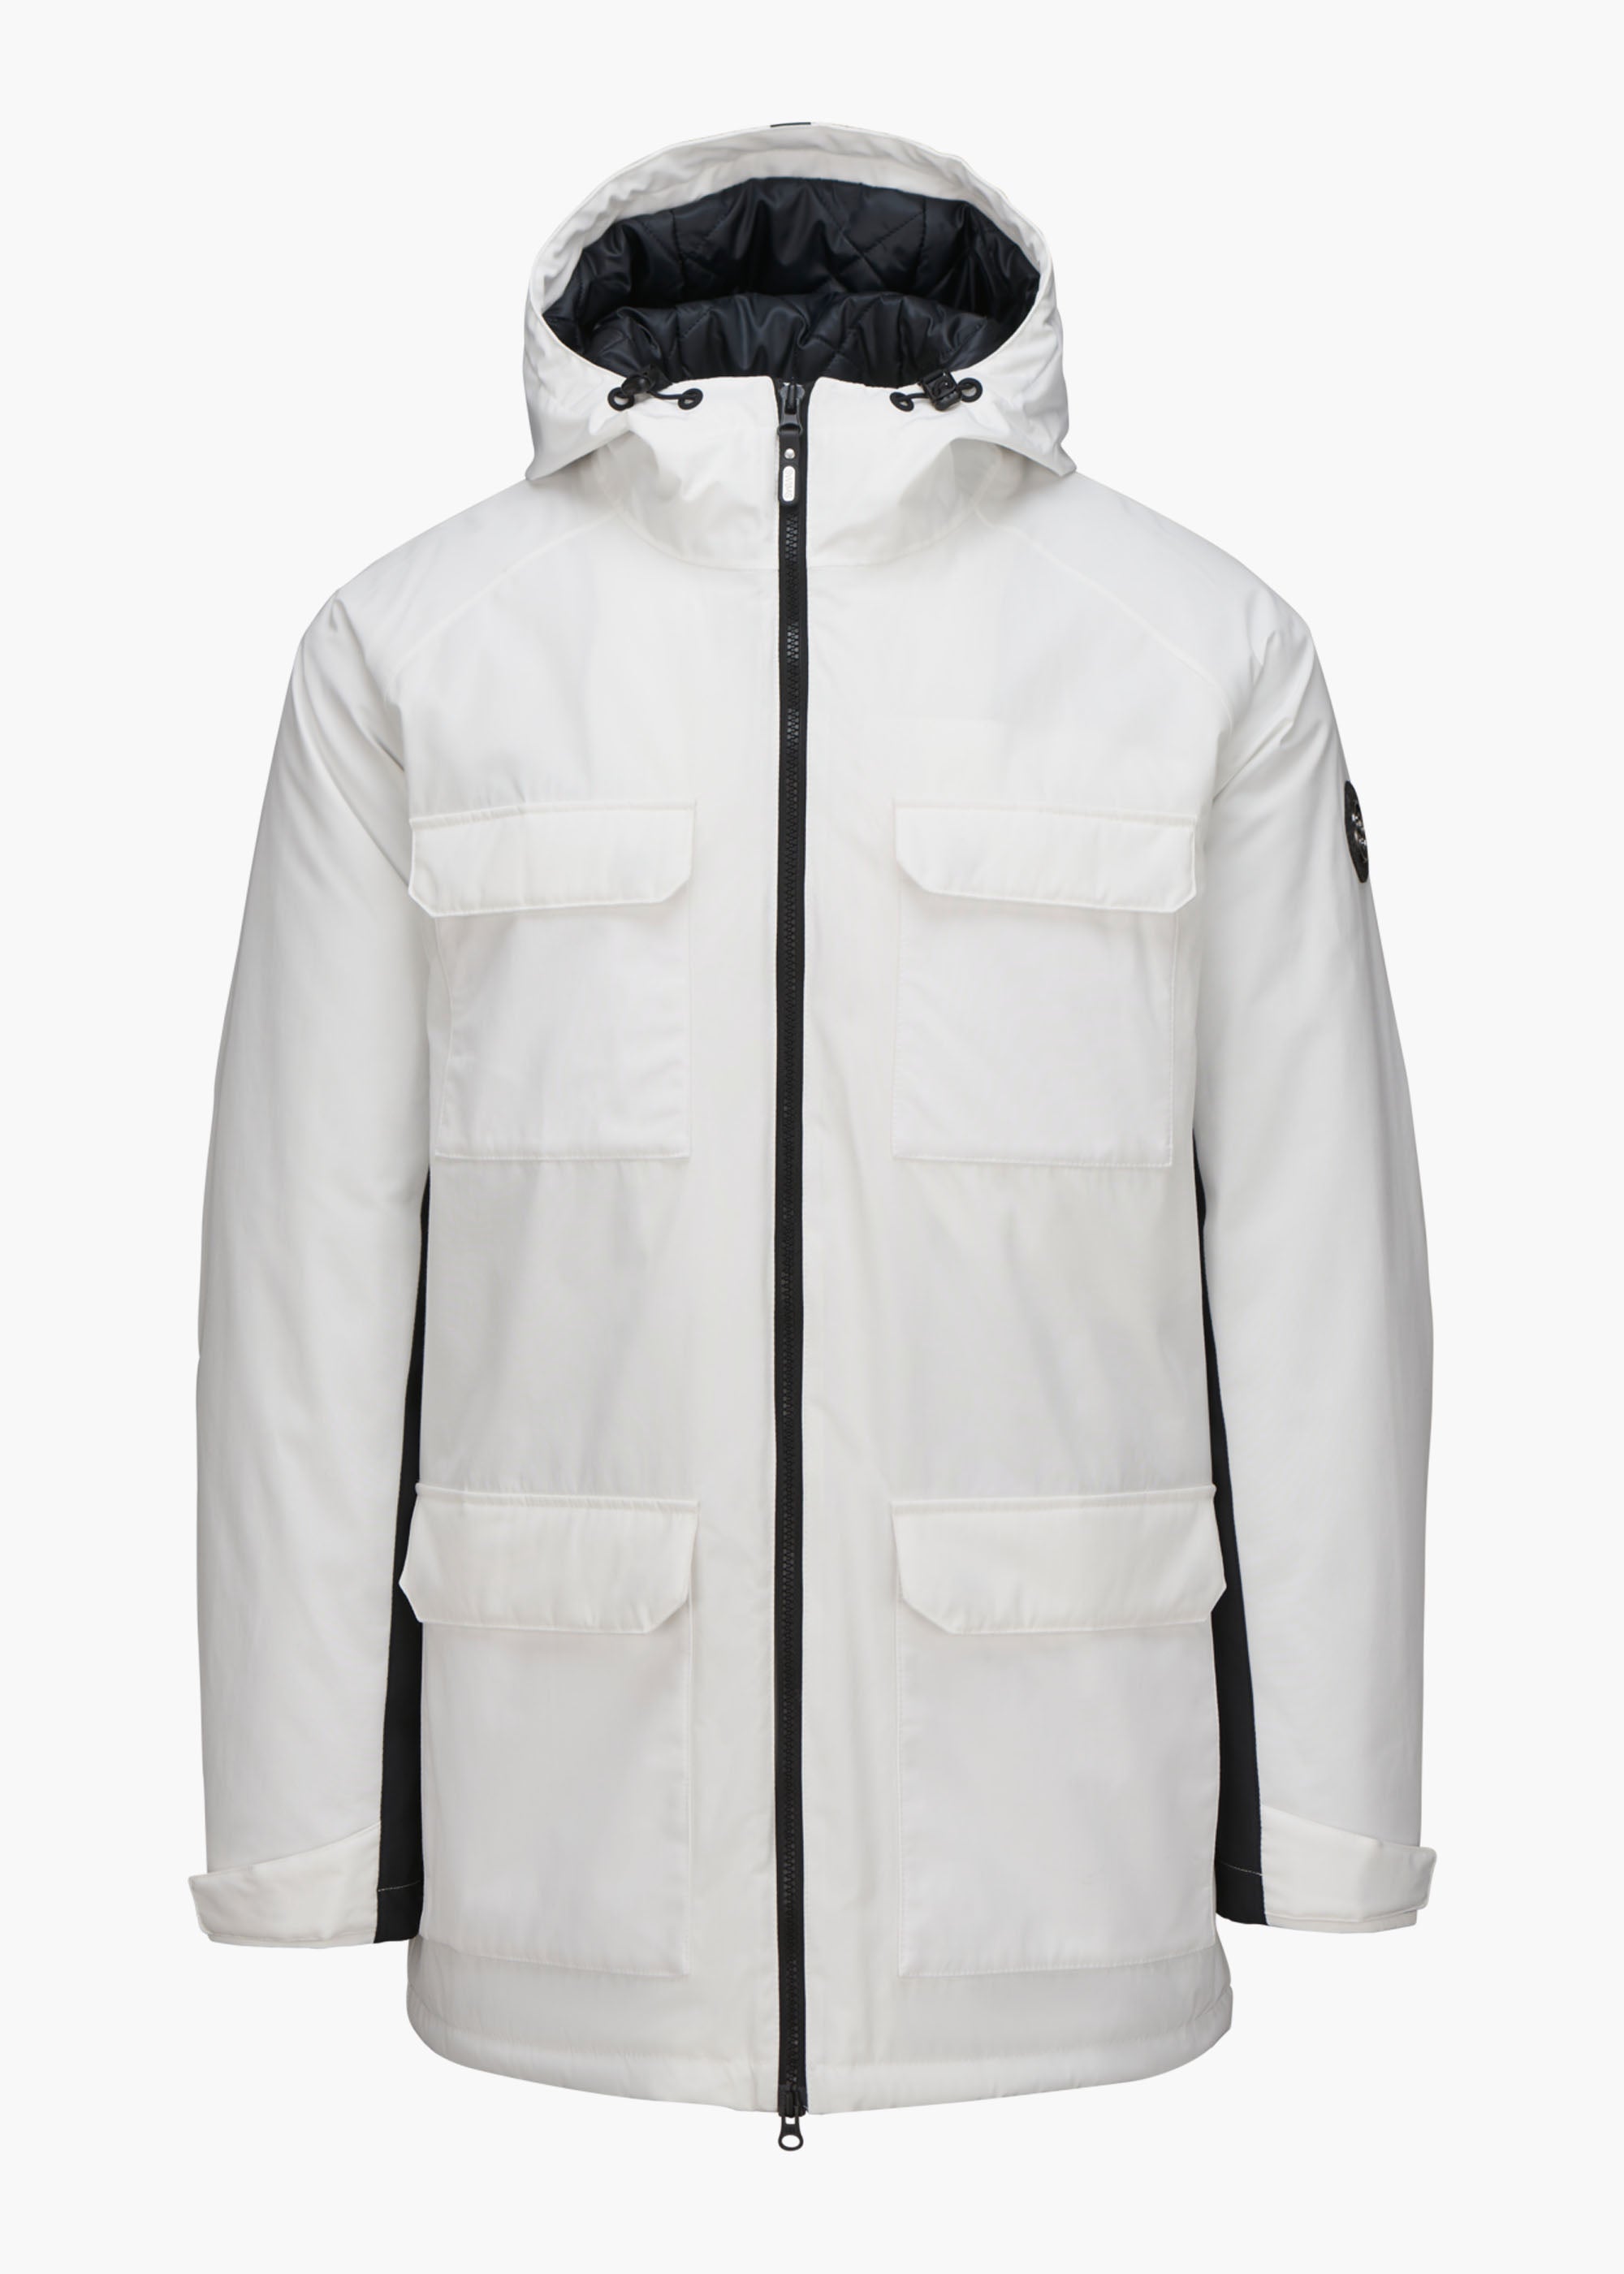 Laax Jacket - background::white,variant::White